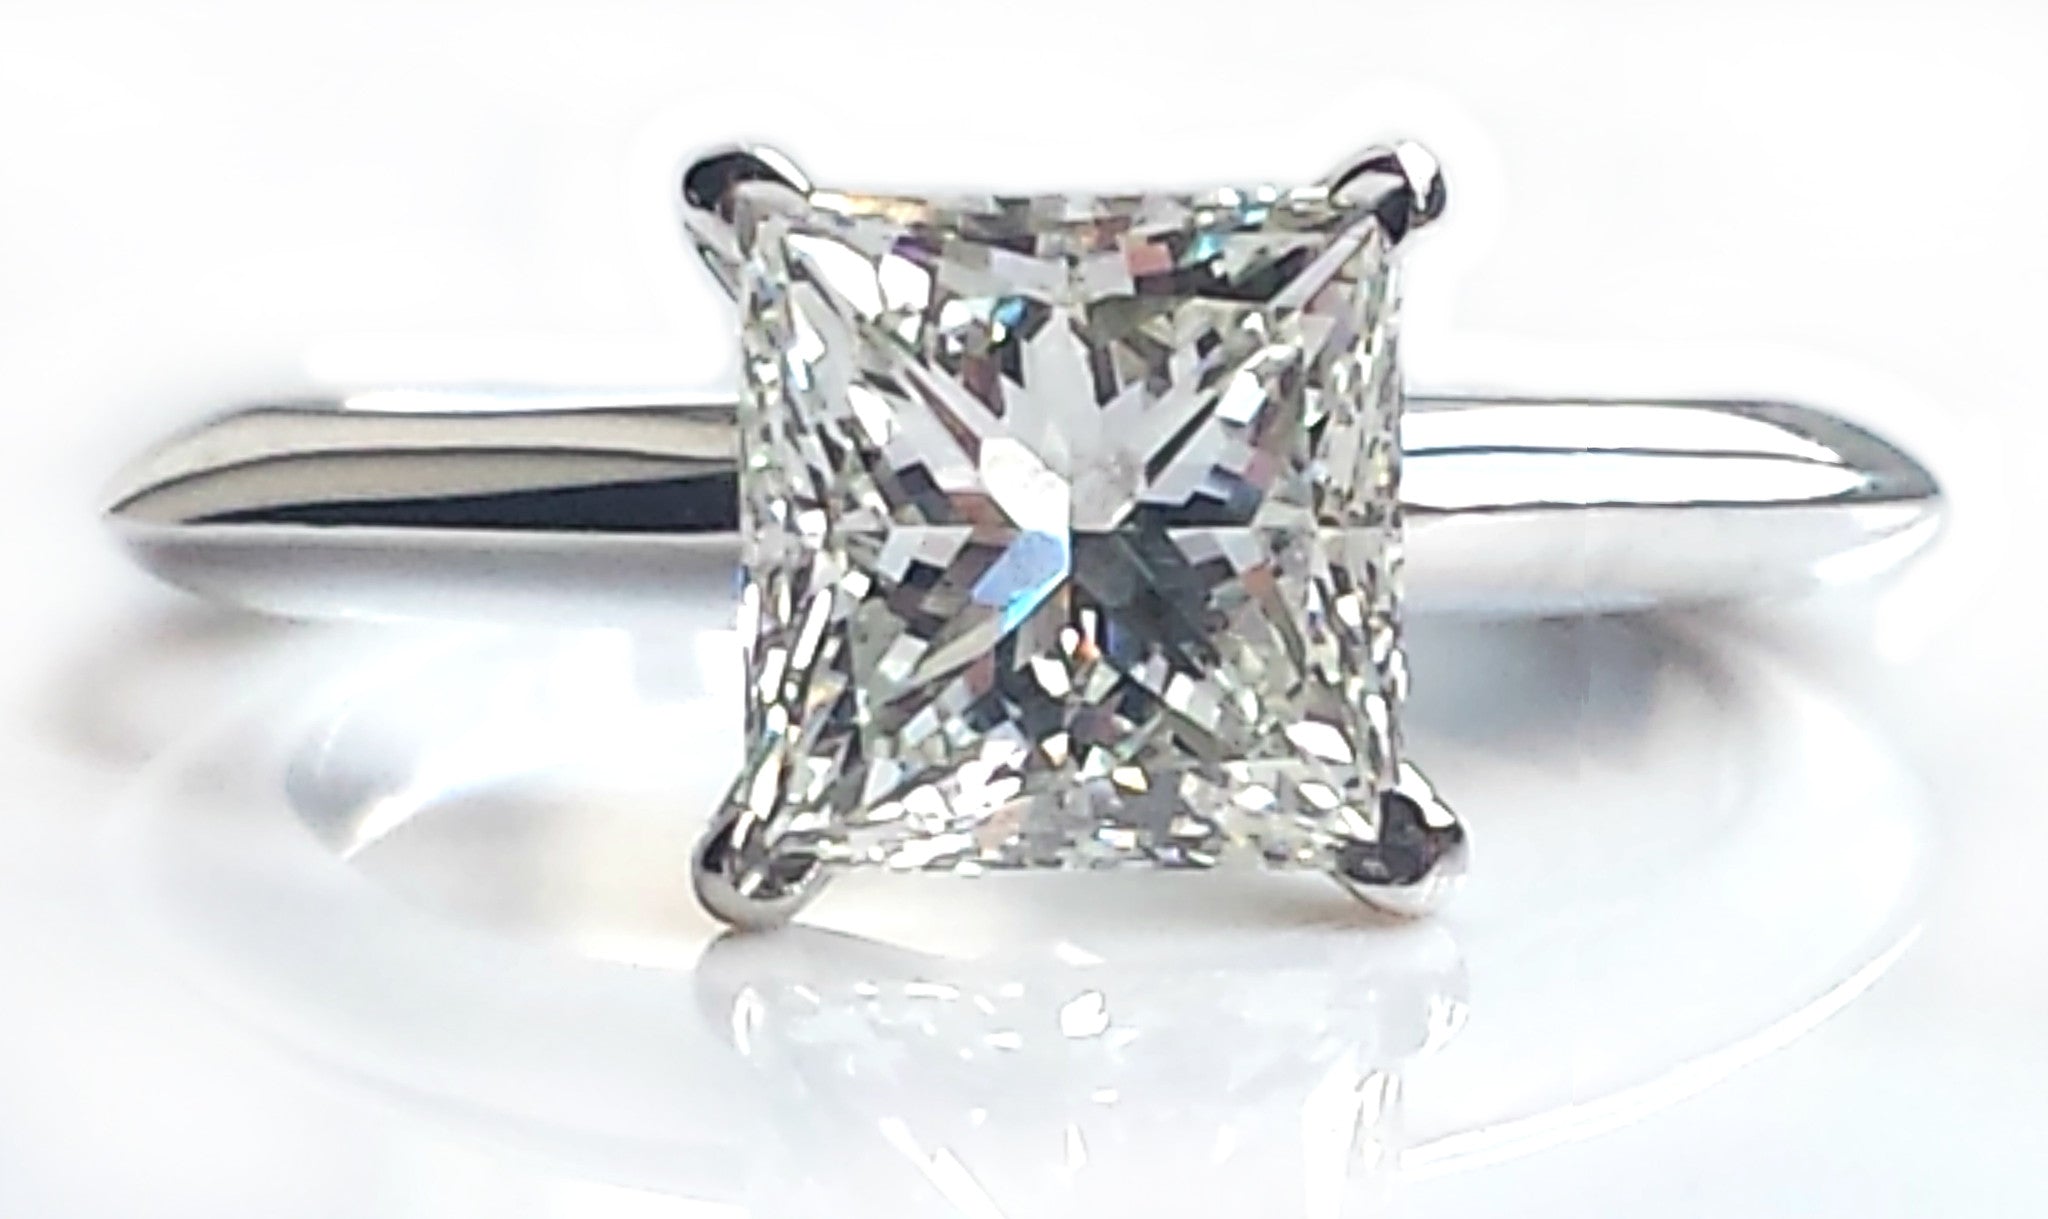  Tiffany  Co 1 52ct I VVS2 Princess  Cut  Square Diamond 